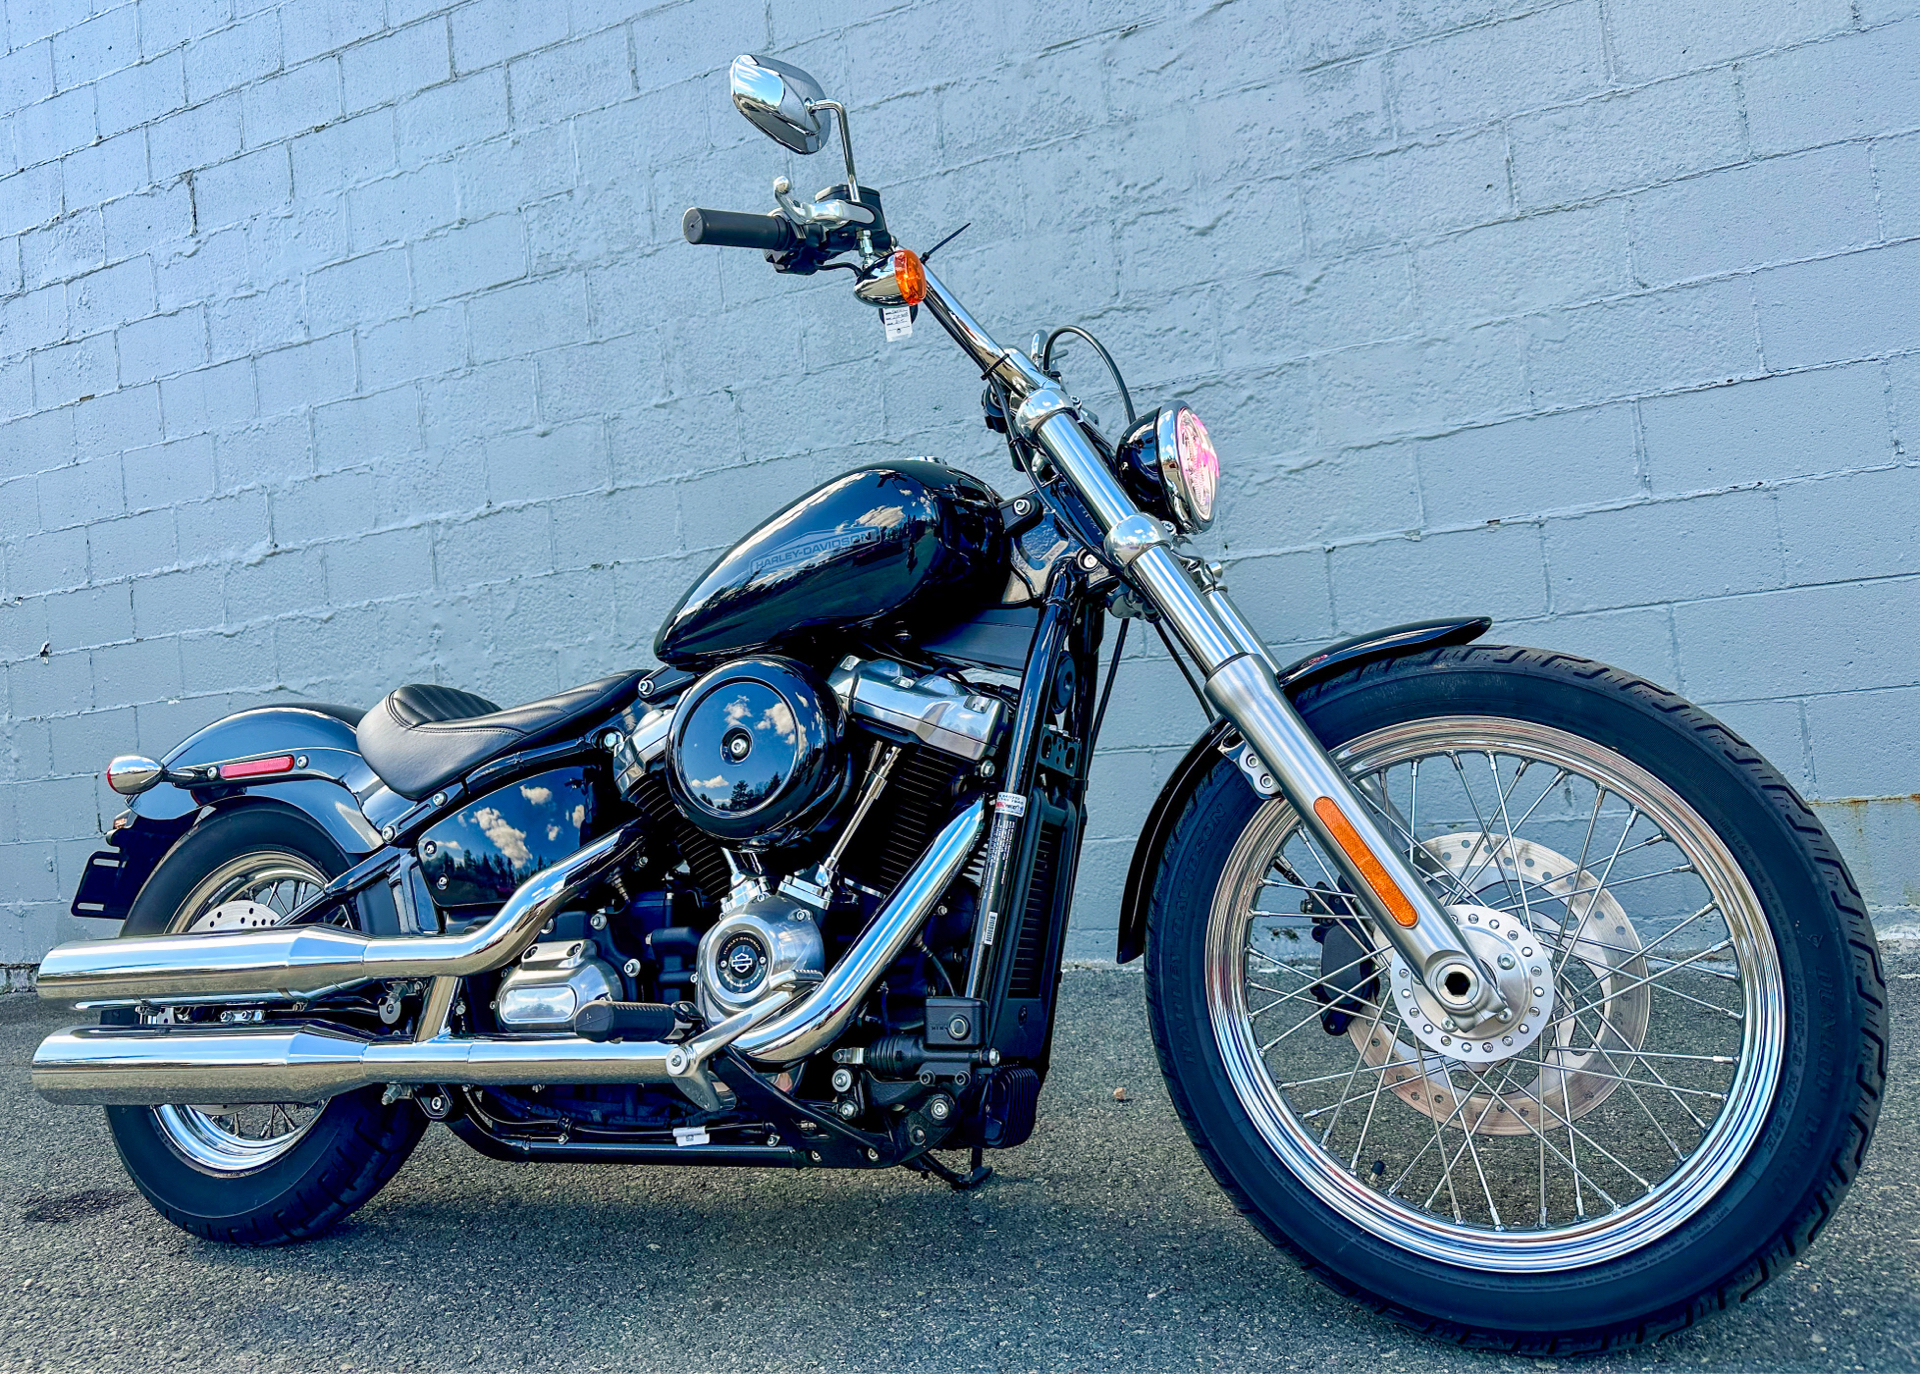 2020 Harley-Davidson Softail® Standard in Foxboro, Massachusetts - Photo 3